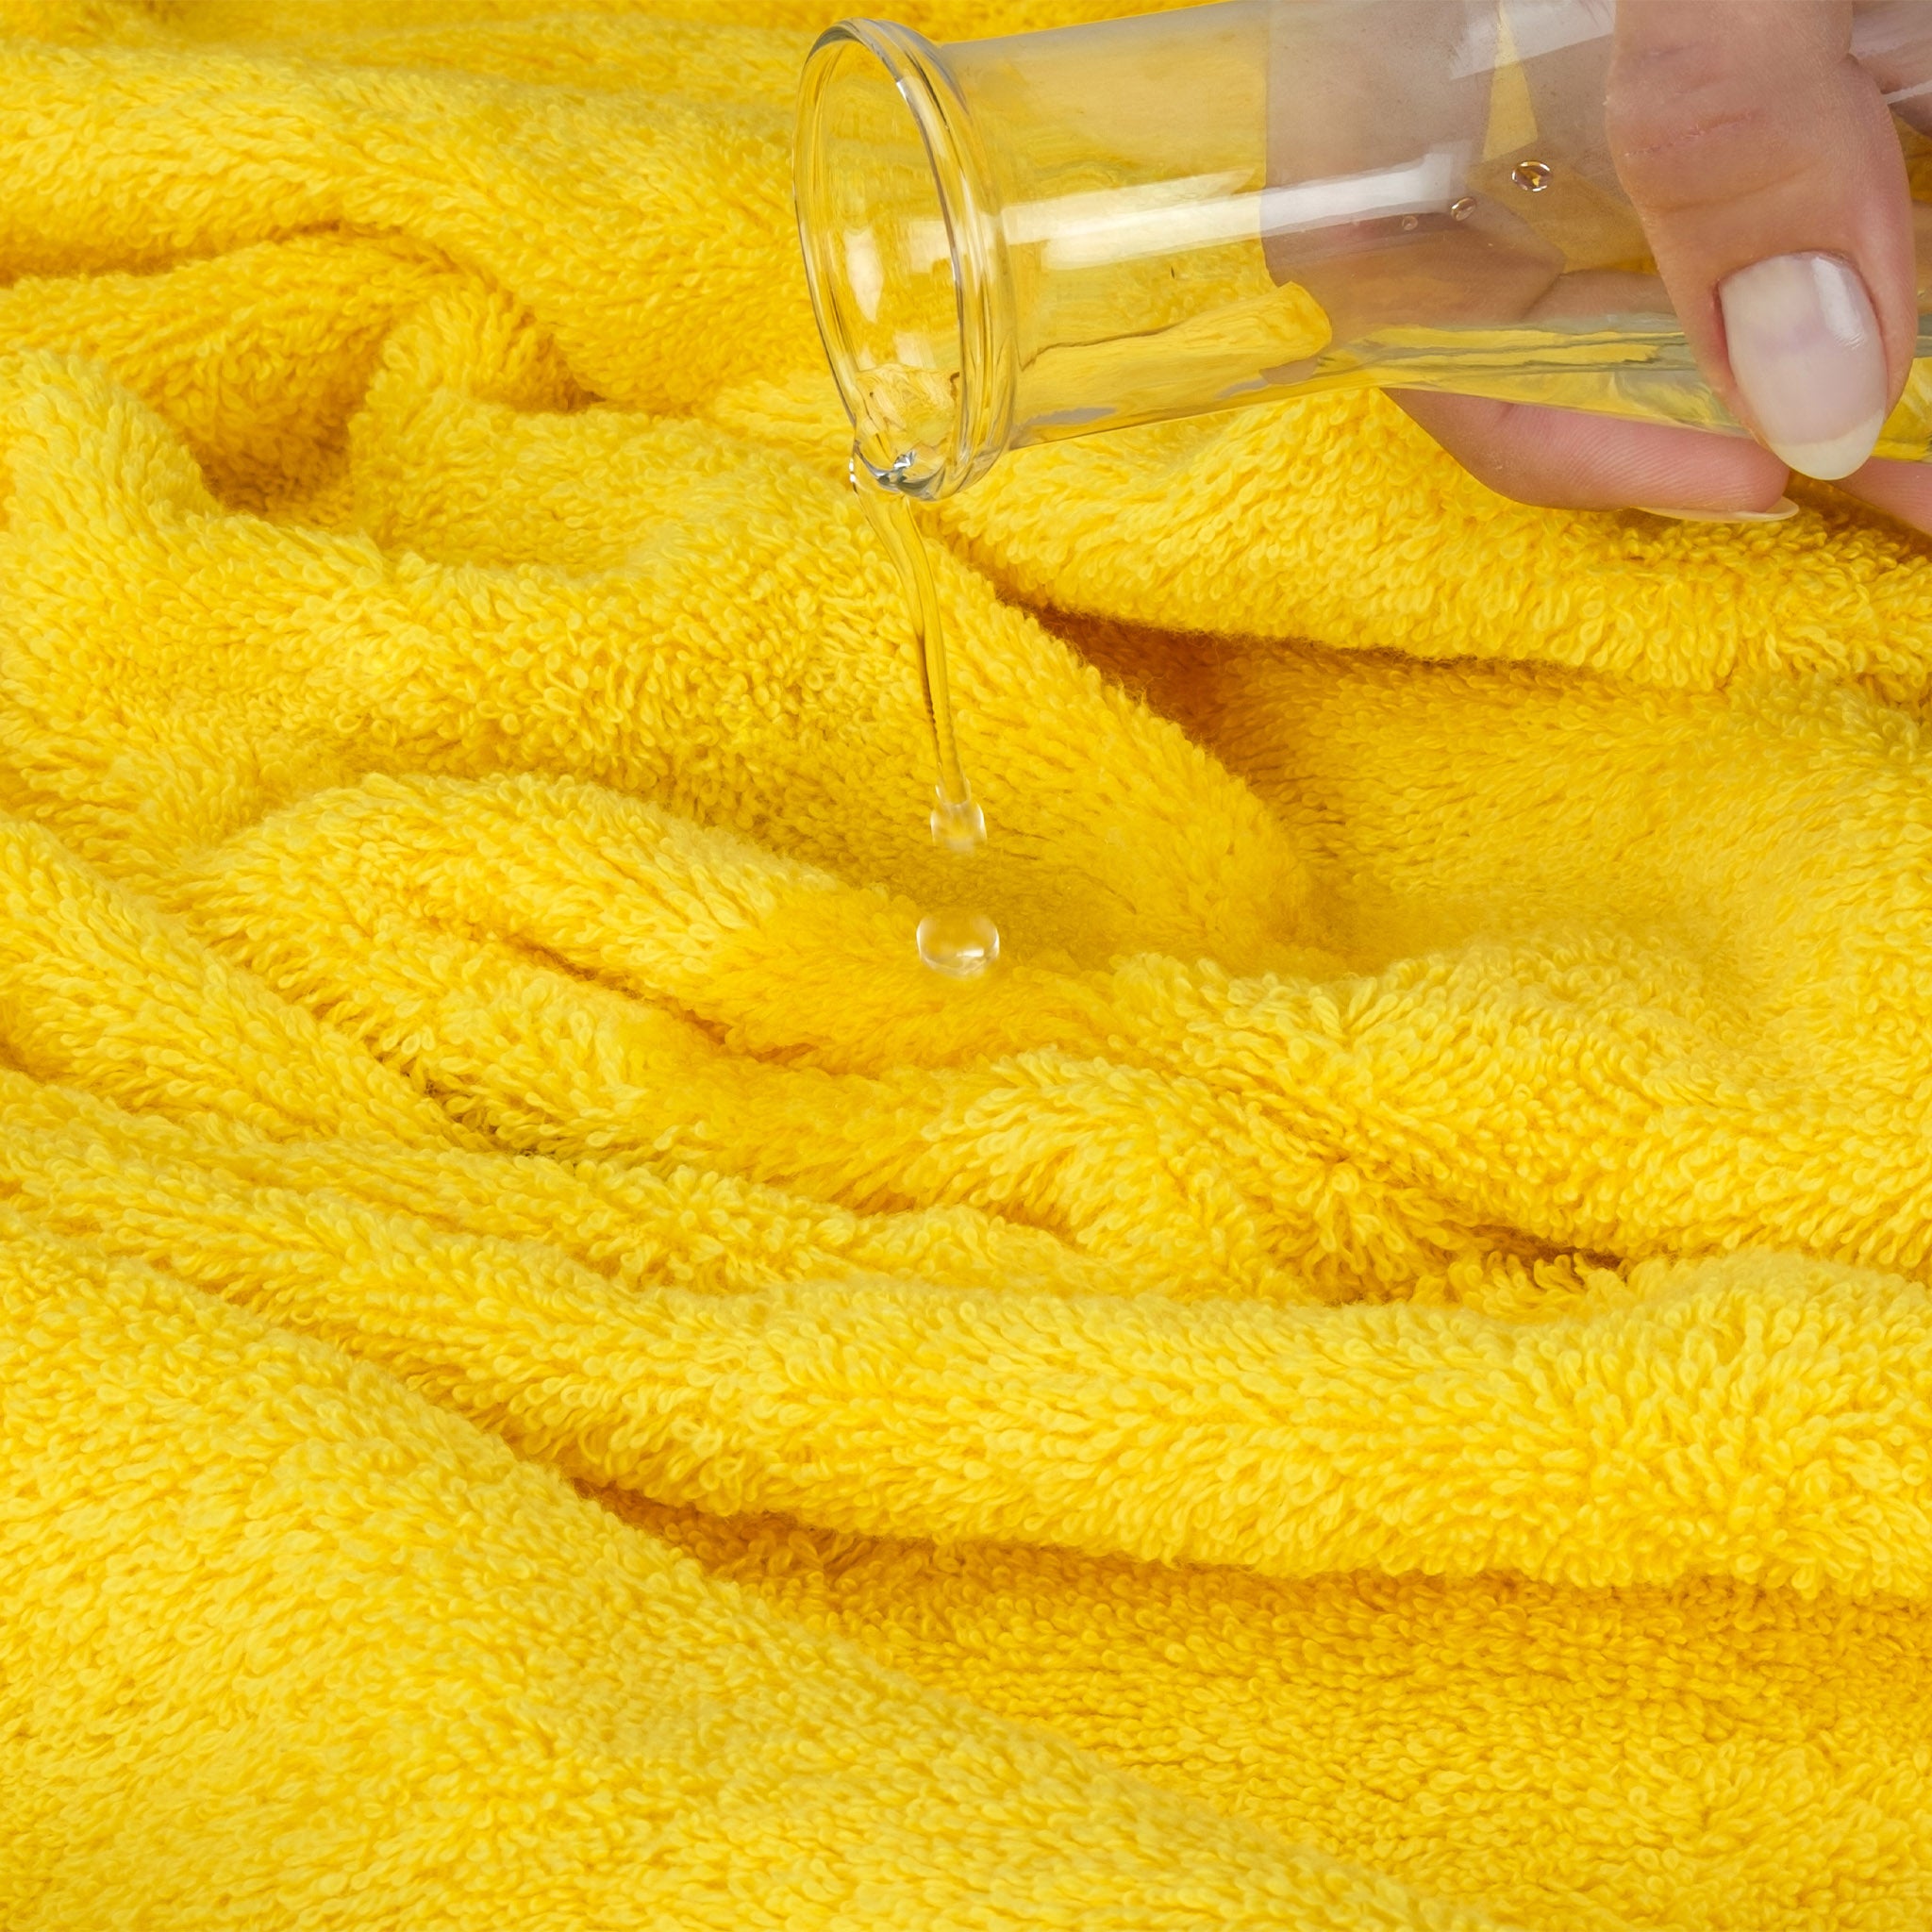 American Soft Linen 100% Turkish Cotton 4 Piece Washcloth Set malibu-yellow-5